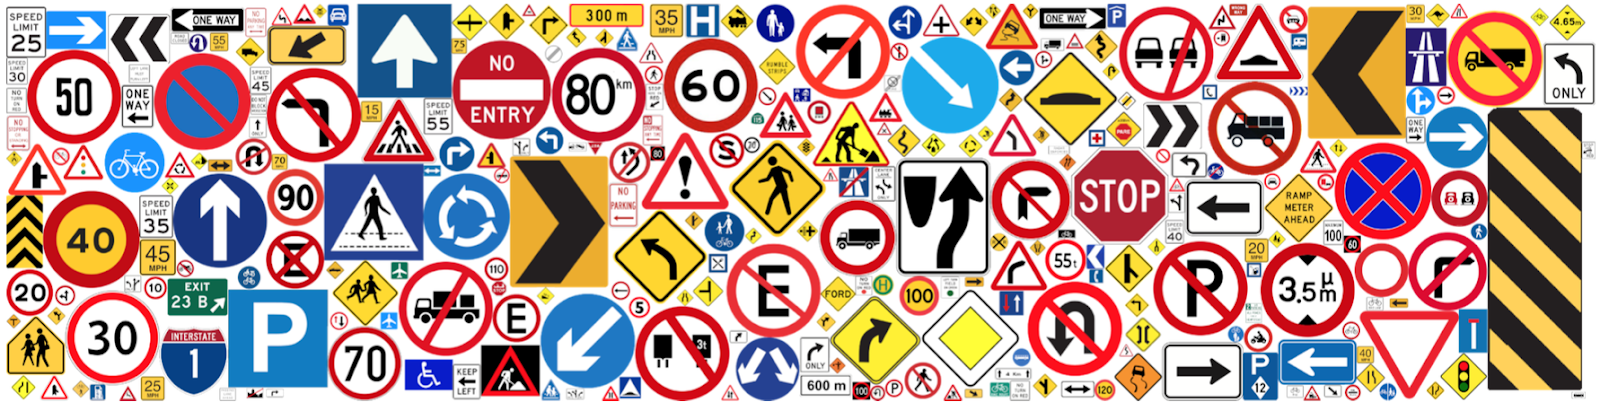 Mapillary Traffic Sign Dataset